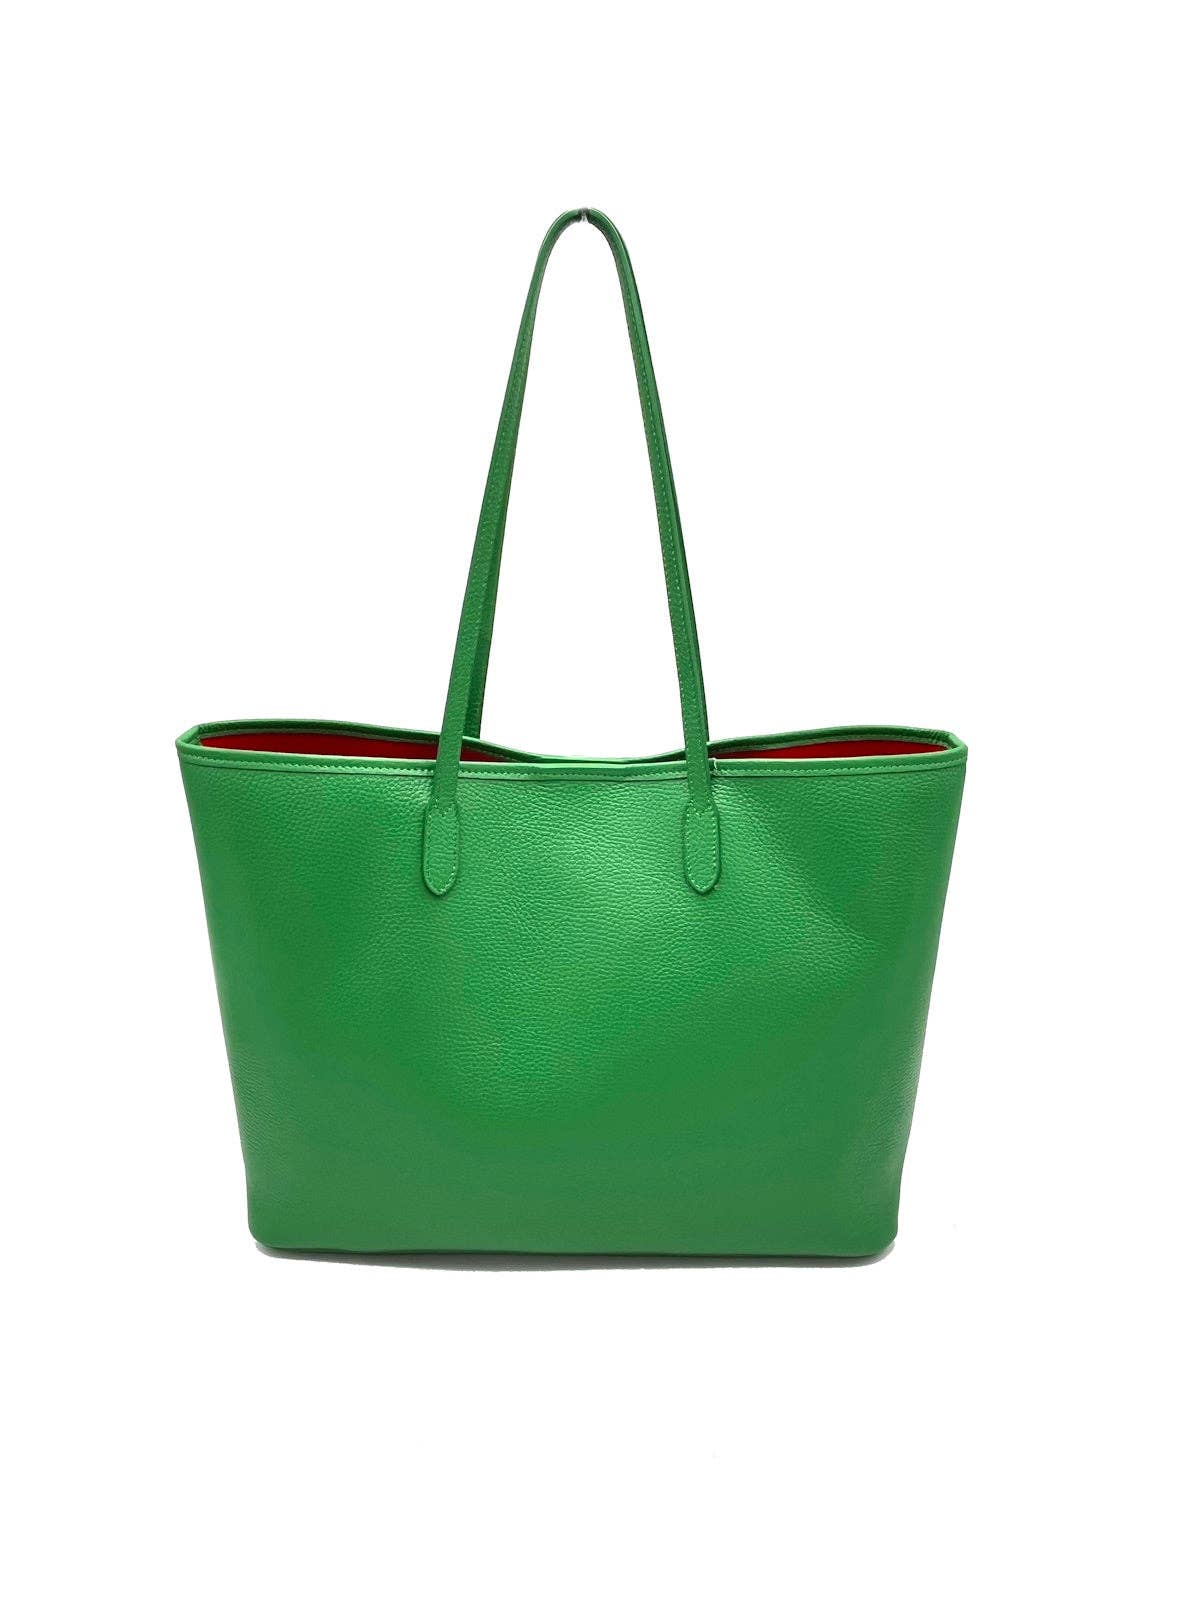 Suie Valentini srl Genuine leather shopping bag, art.112418 - Simple Good